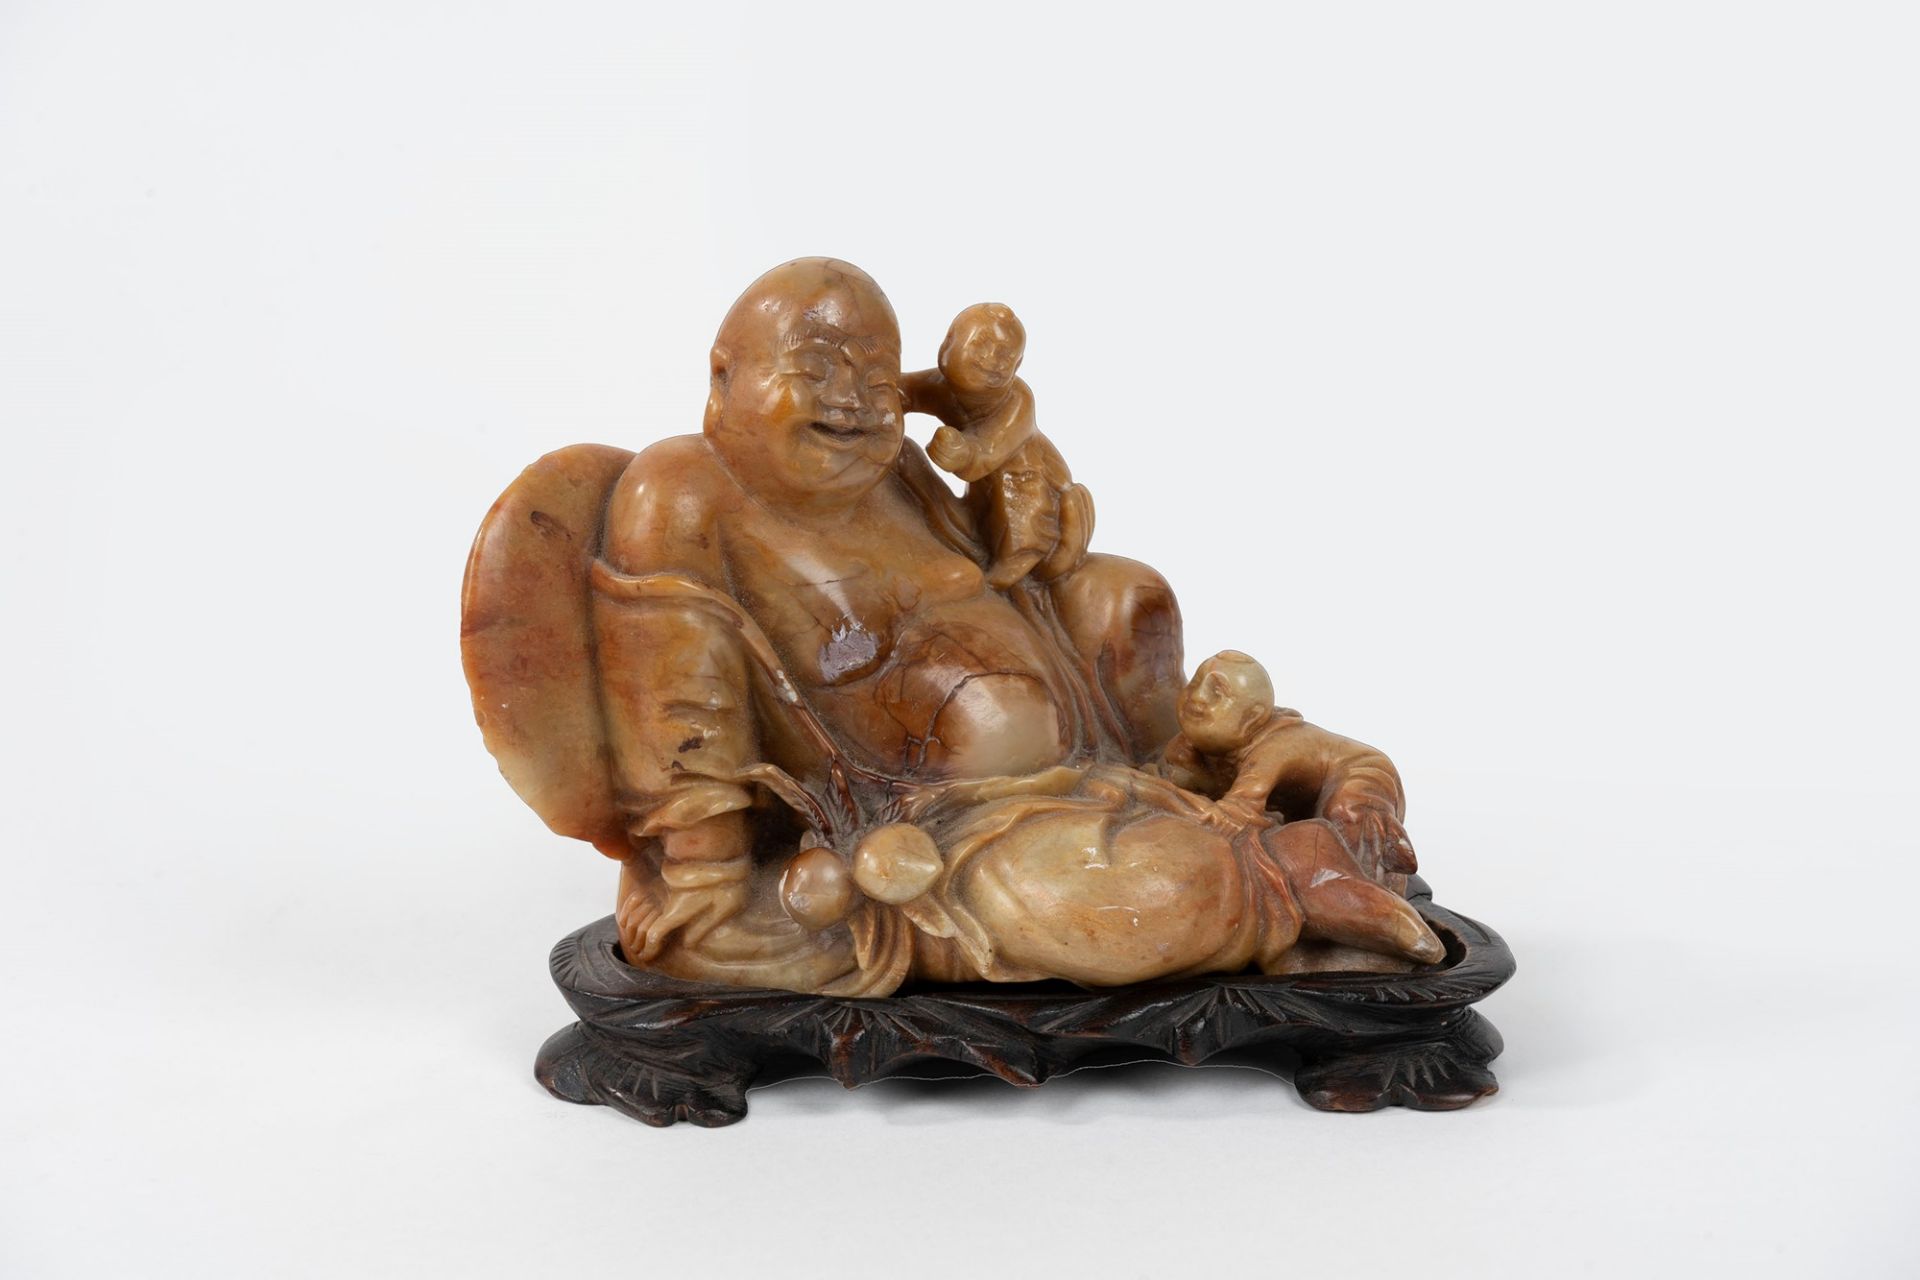 Soapstone sculpture depicting Budai, China, 19th century